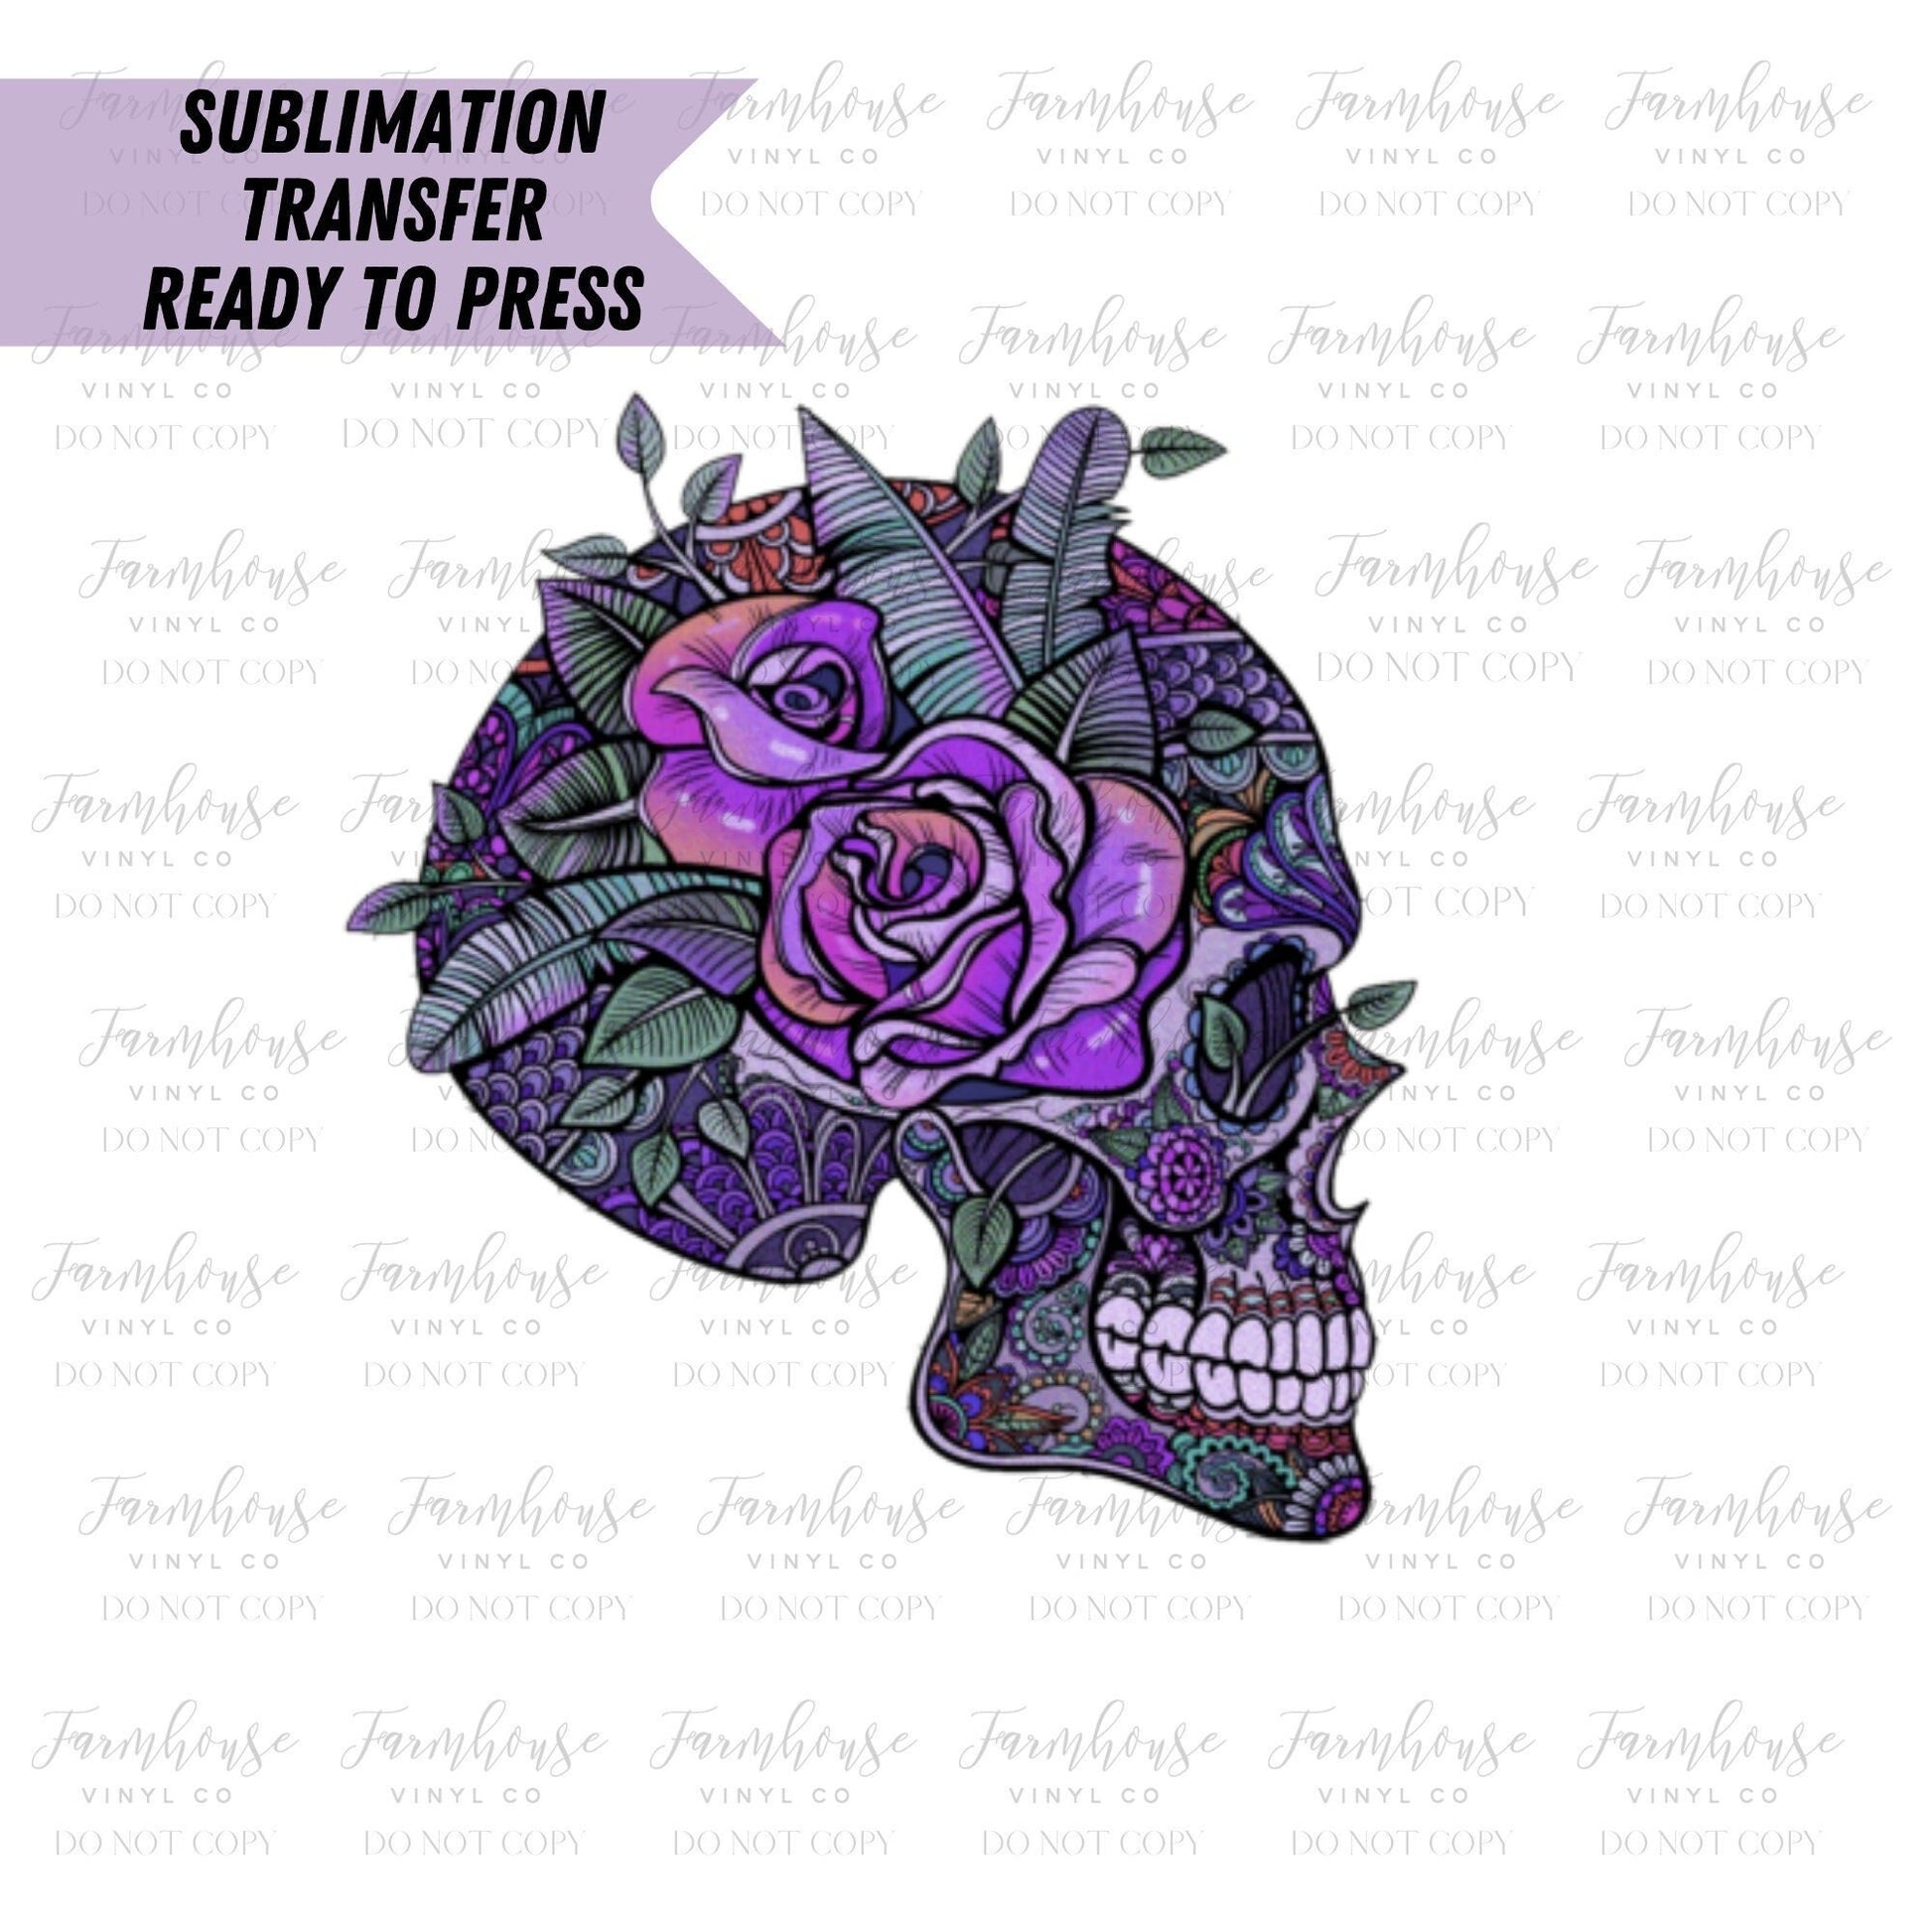 Floral Purple Skull Transfer Ready to Press Sublimation Transfer - Farmhouse Vinyl Co